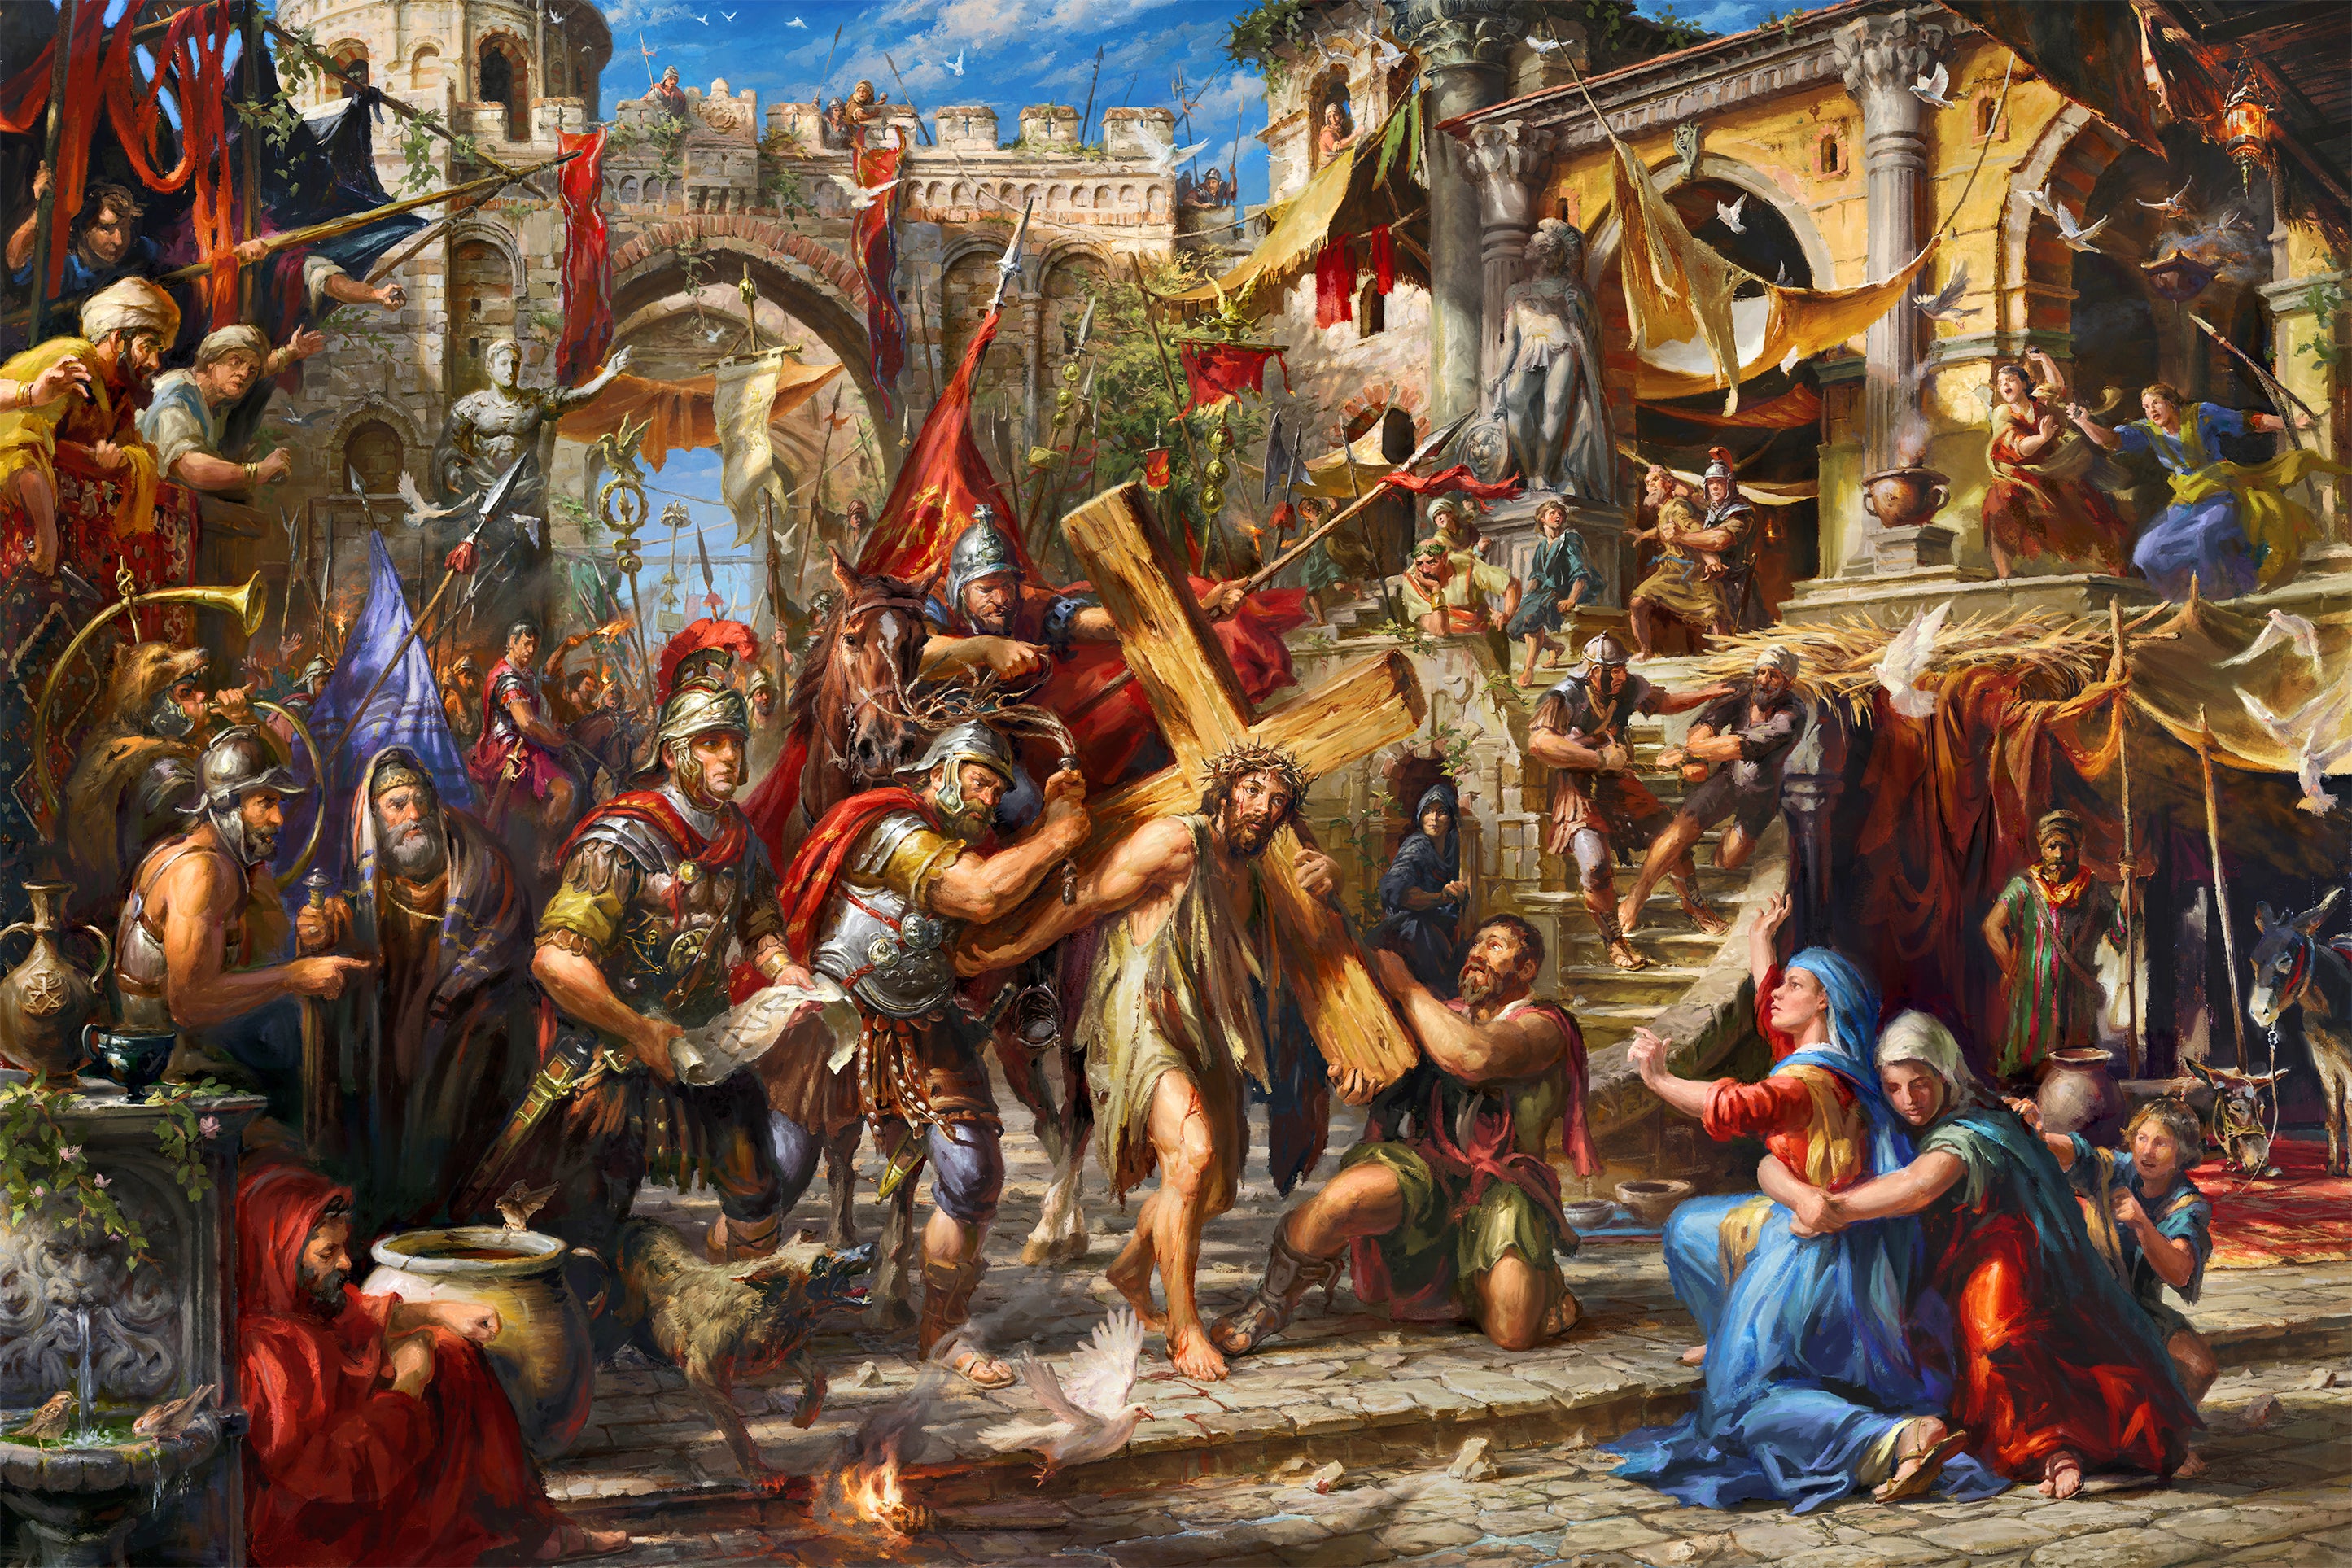 the way of love - jesus carrying his cross through jerusalem sorrow and struggle - Blend Cota original oil painting - renaissance revival - blend cota studios art